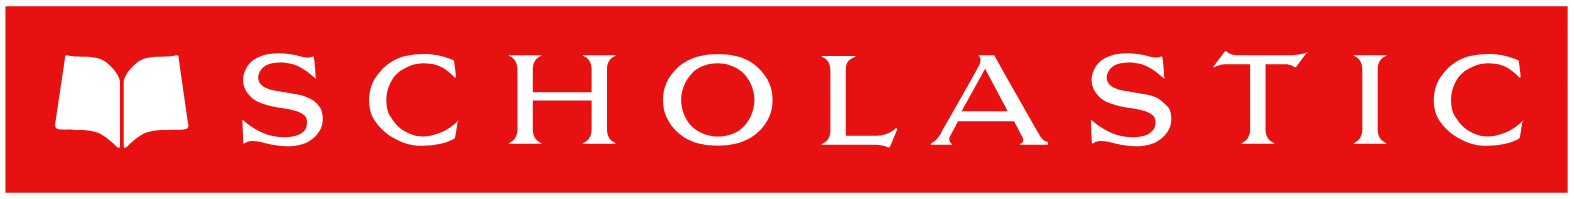 Scholastic logo large (transparent PNG)